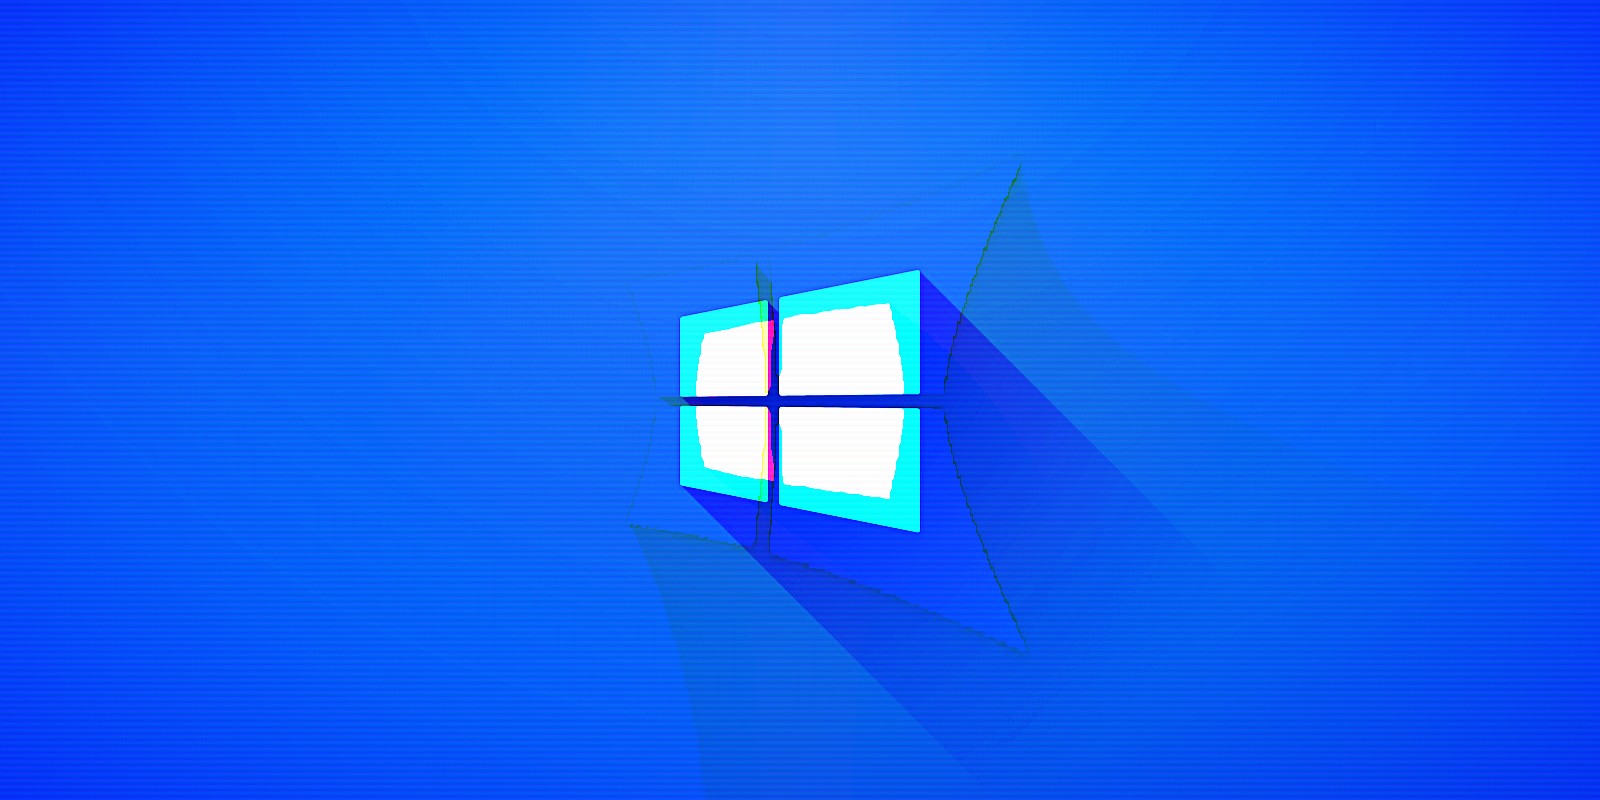 How to Unzip Files on Windows 10?